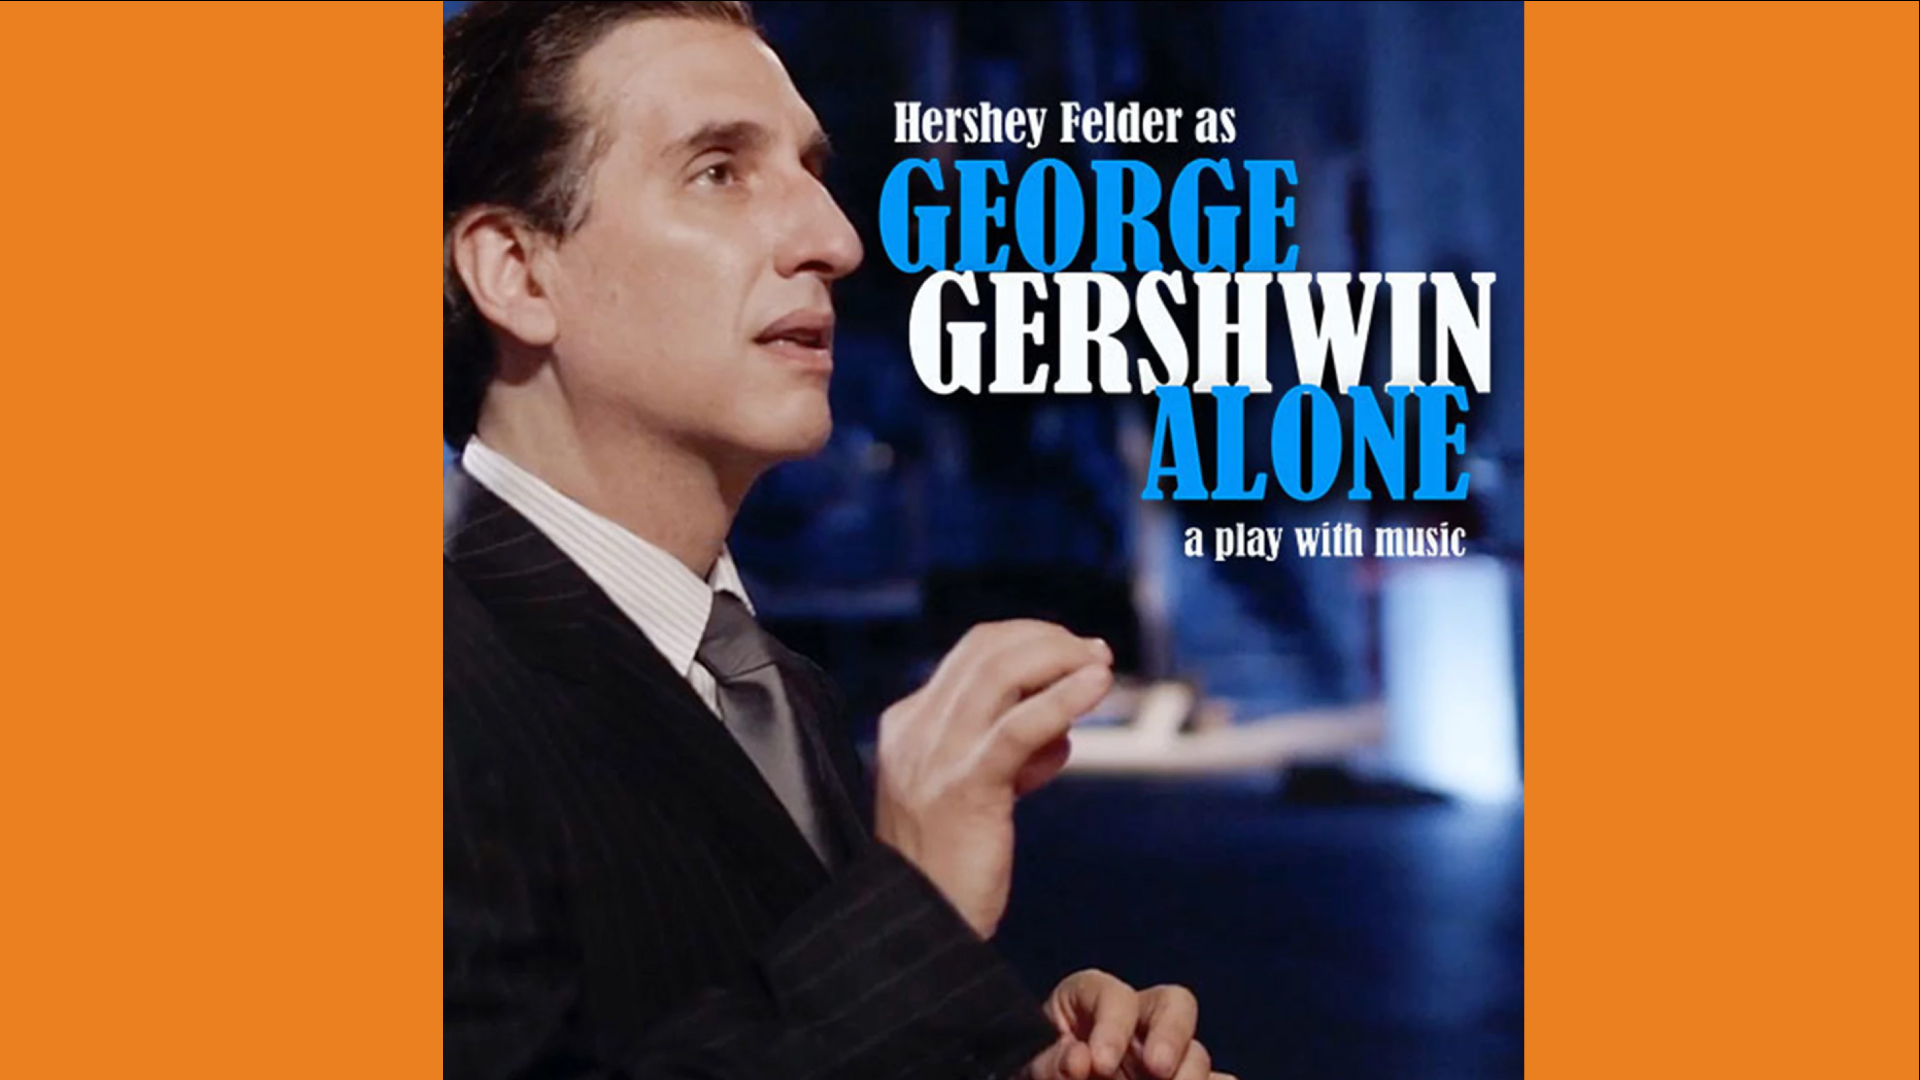 Hershey Felder as George Gershwin Alone, A Play with Music